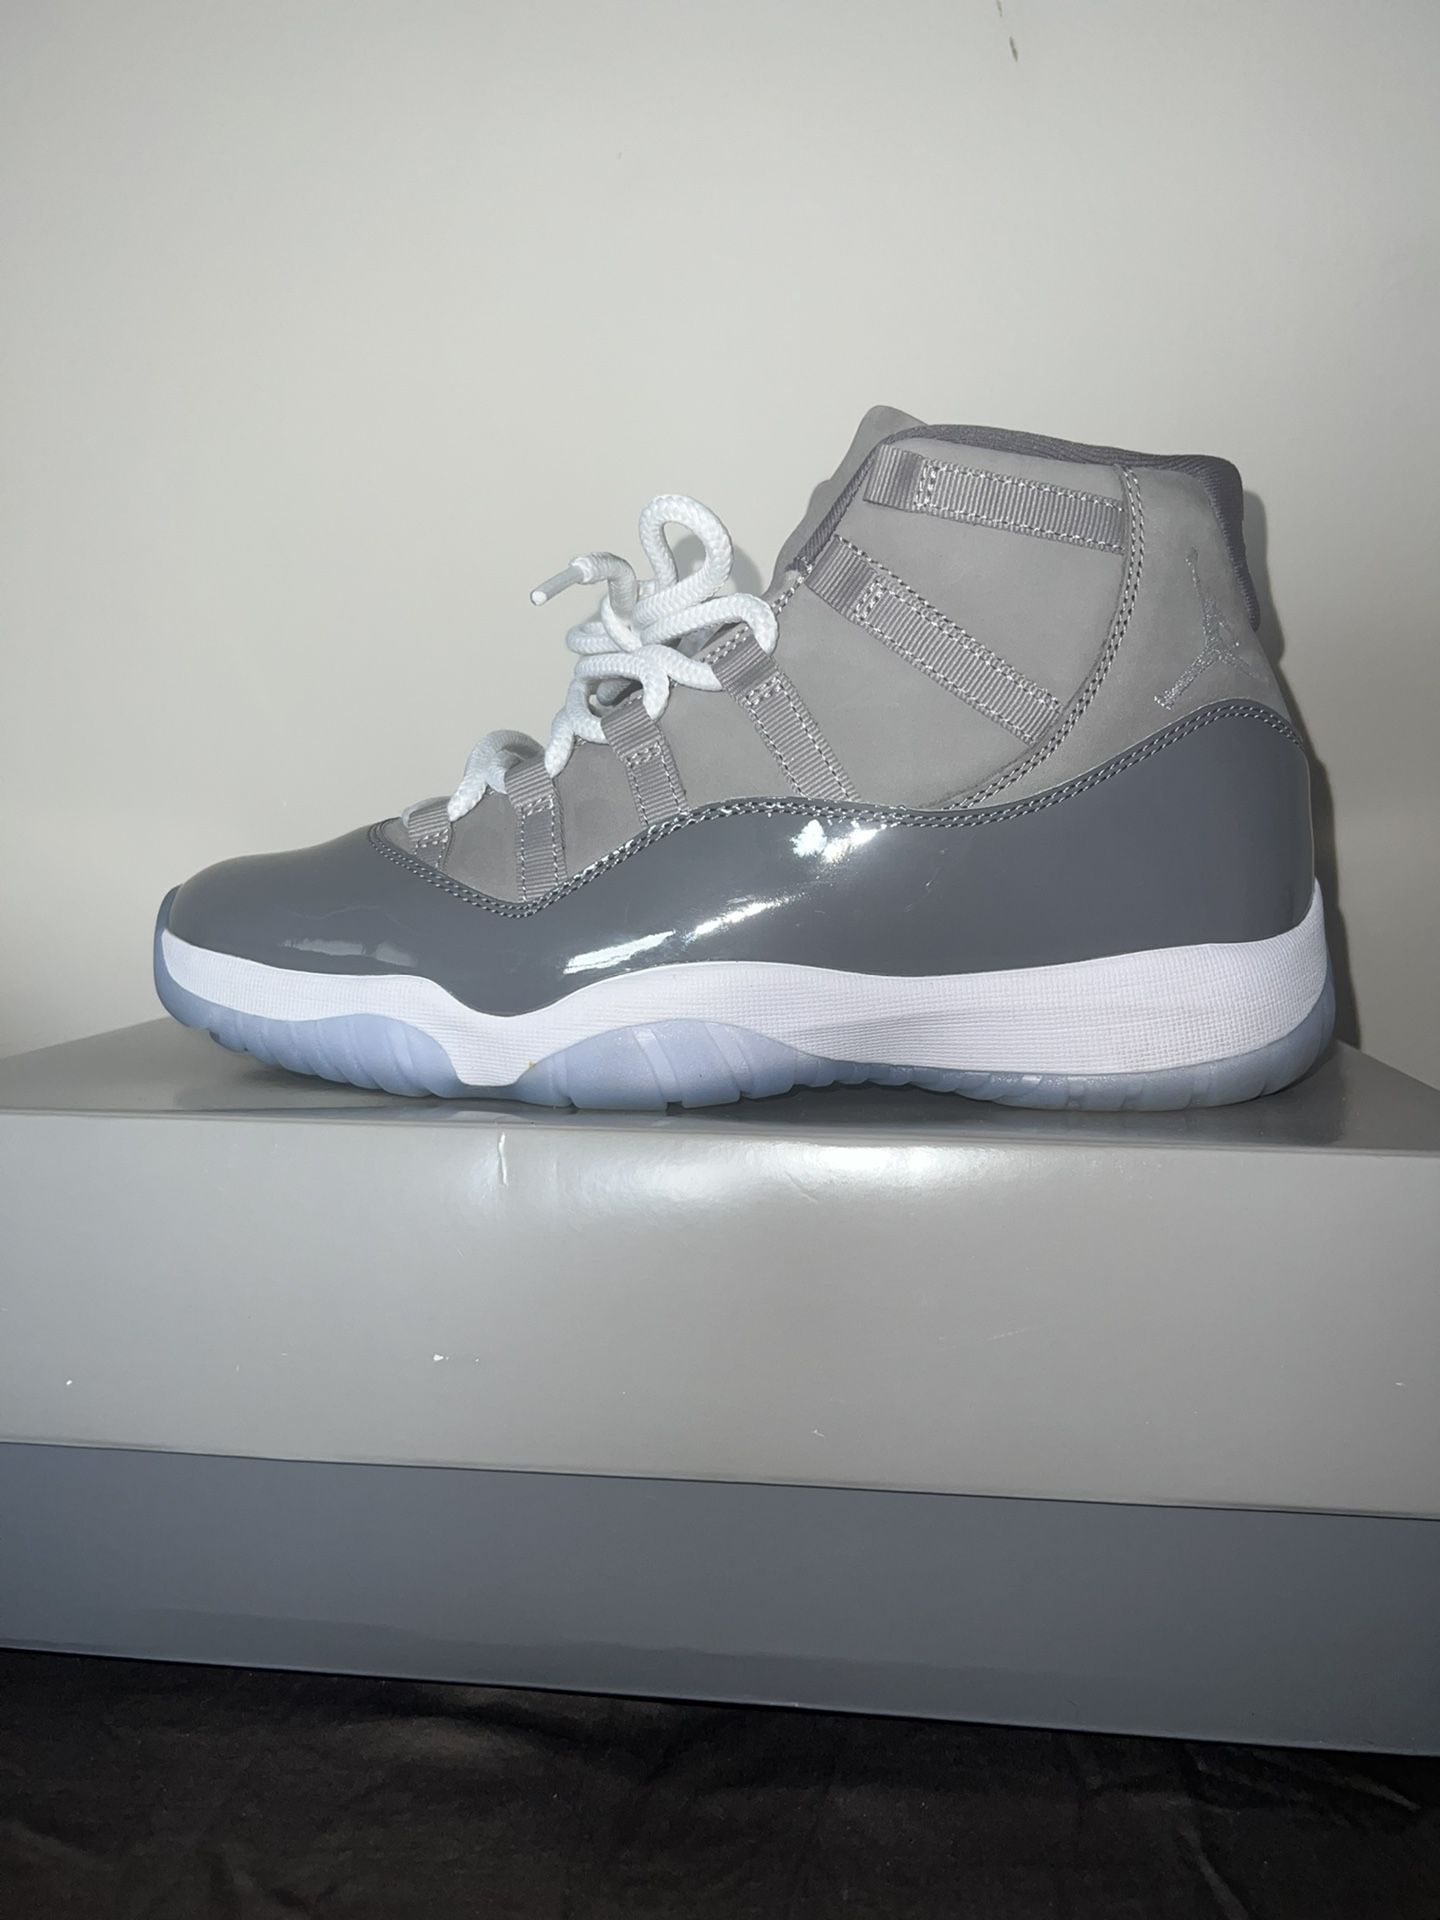 Jordan Retro 11 Cool grey Size 10.5